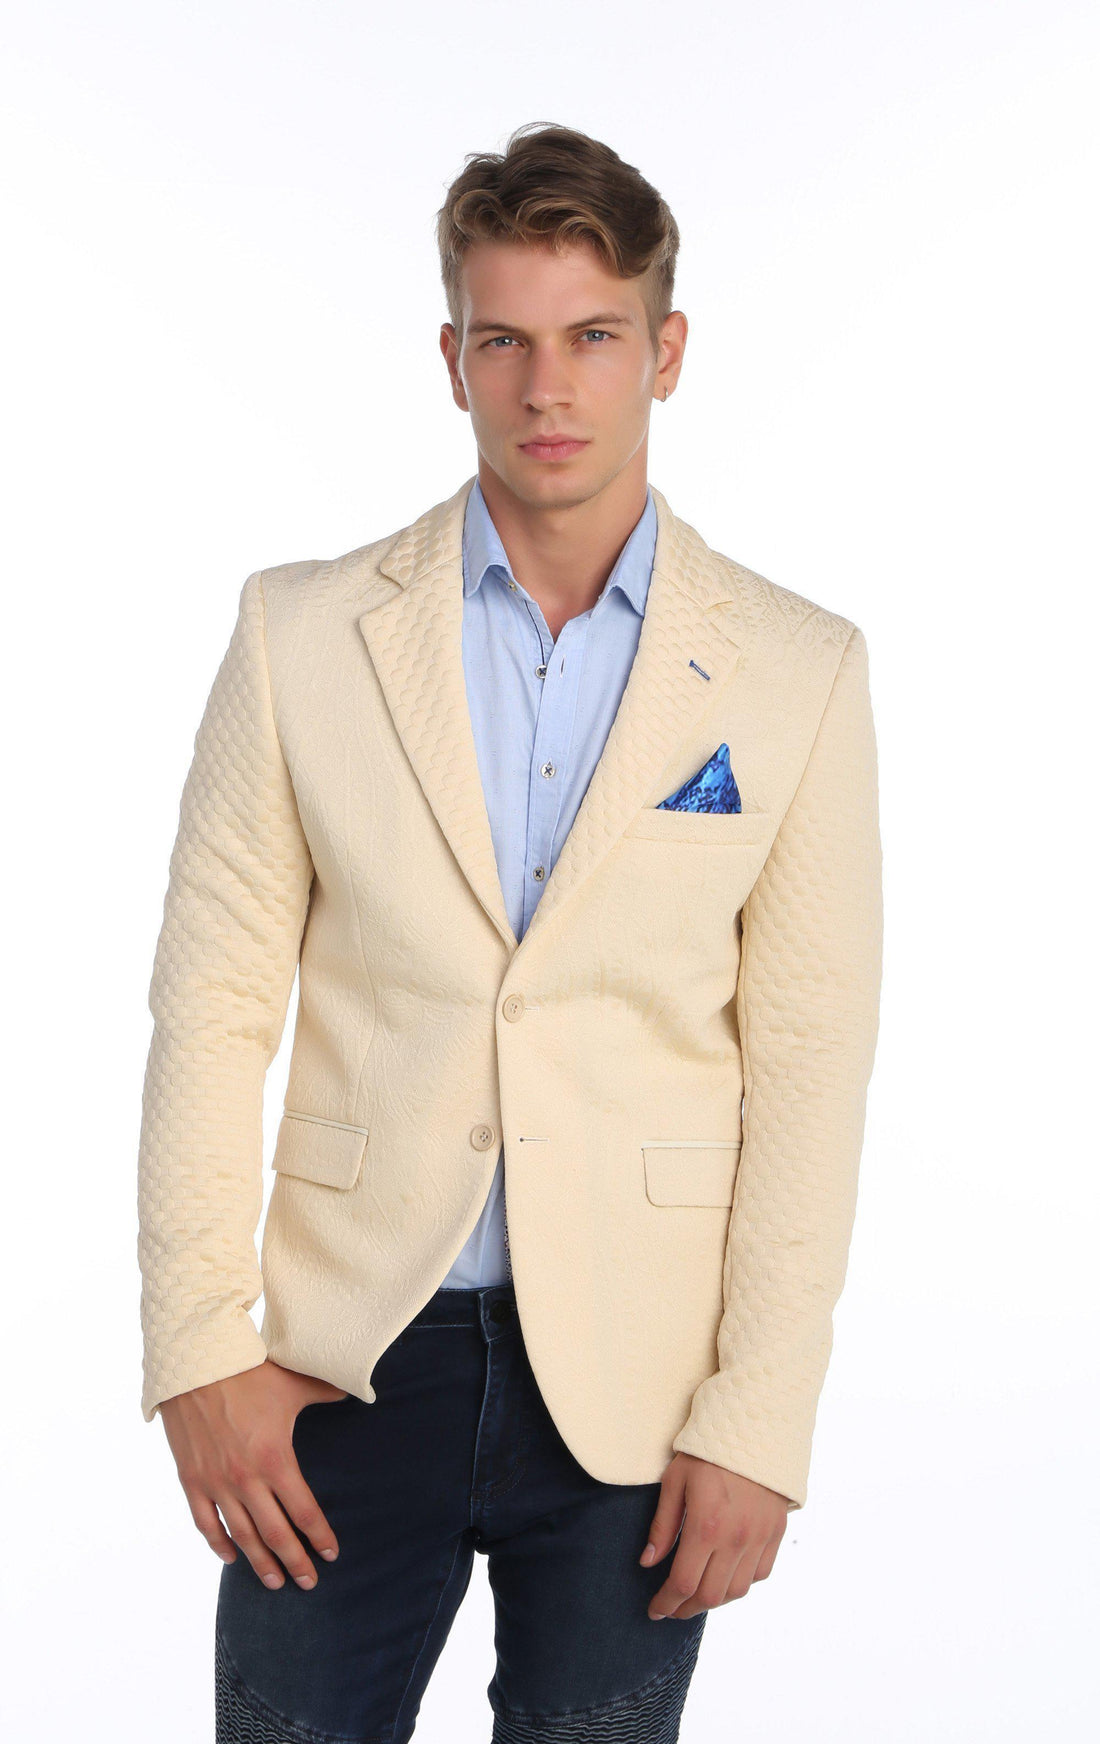 Fitted brocade patterned jacket for men in ecru cream.